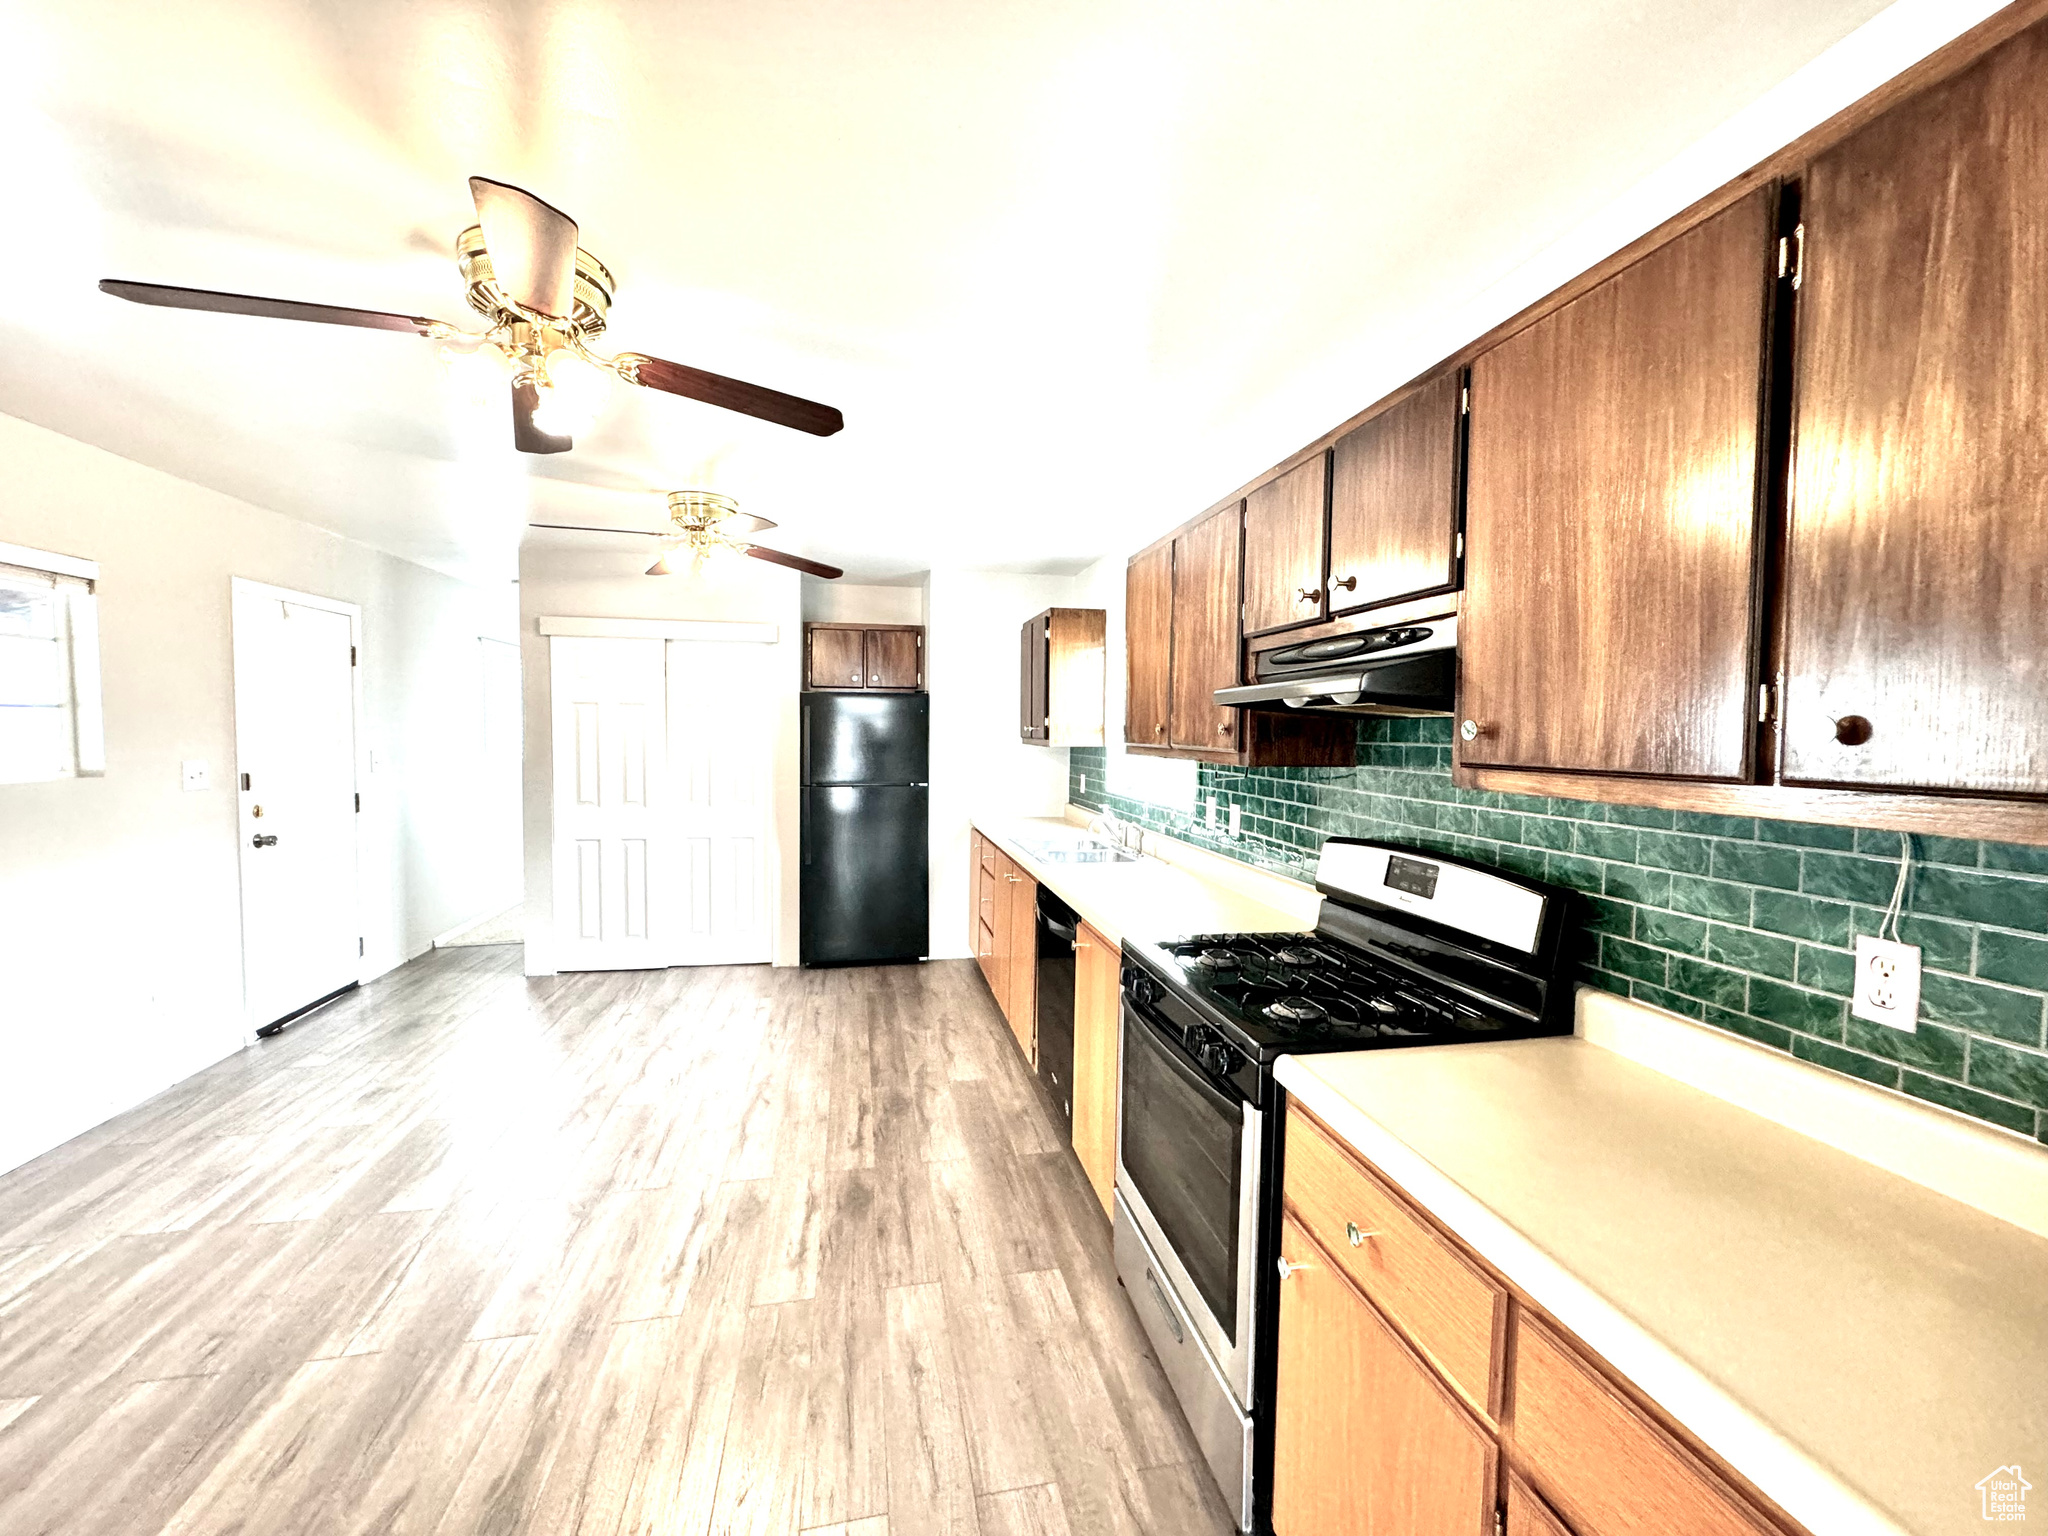 Kitchen featuring ceiling fan, sink, backsplash, black appliances, and light hardwood / wood-style flooring